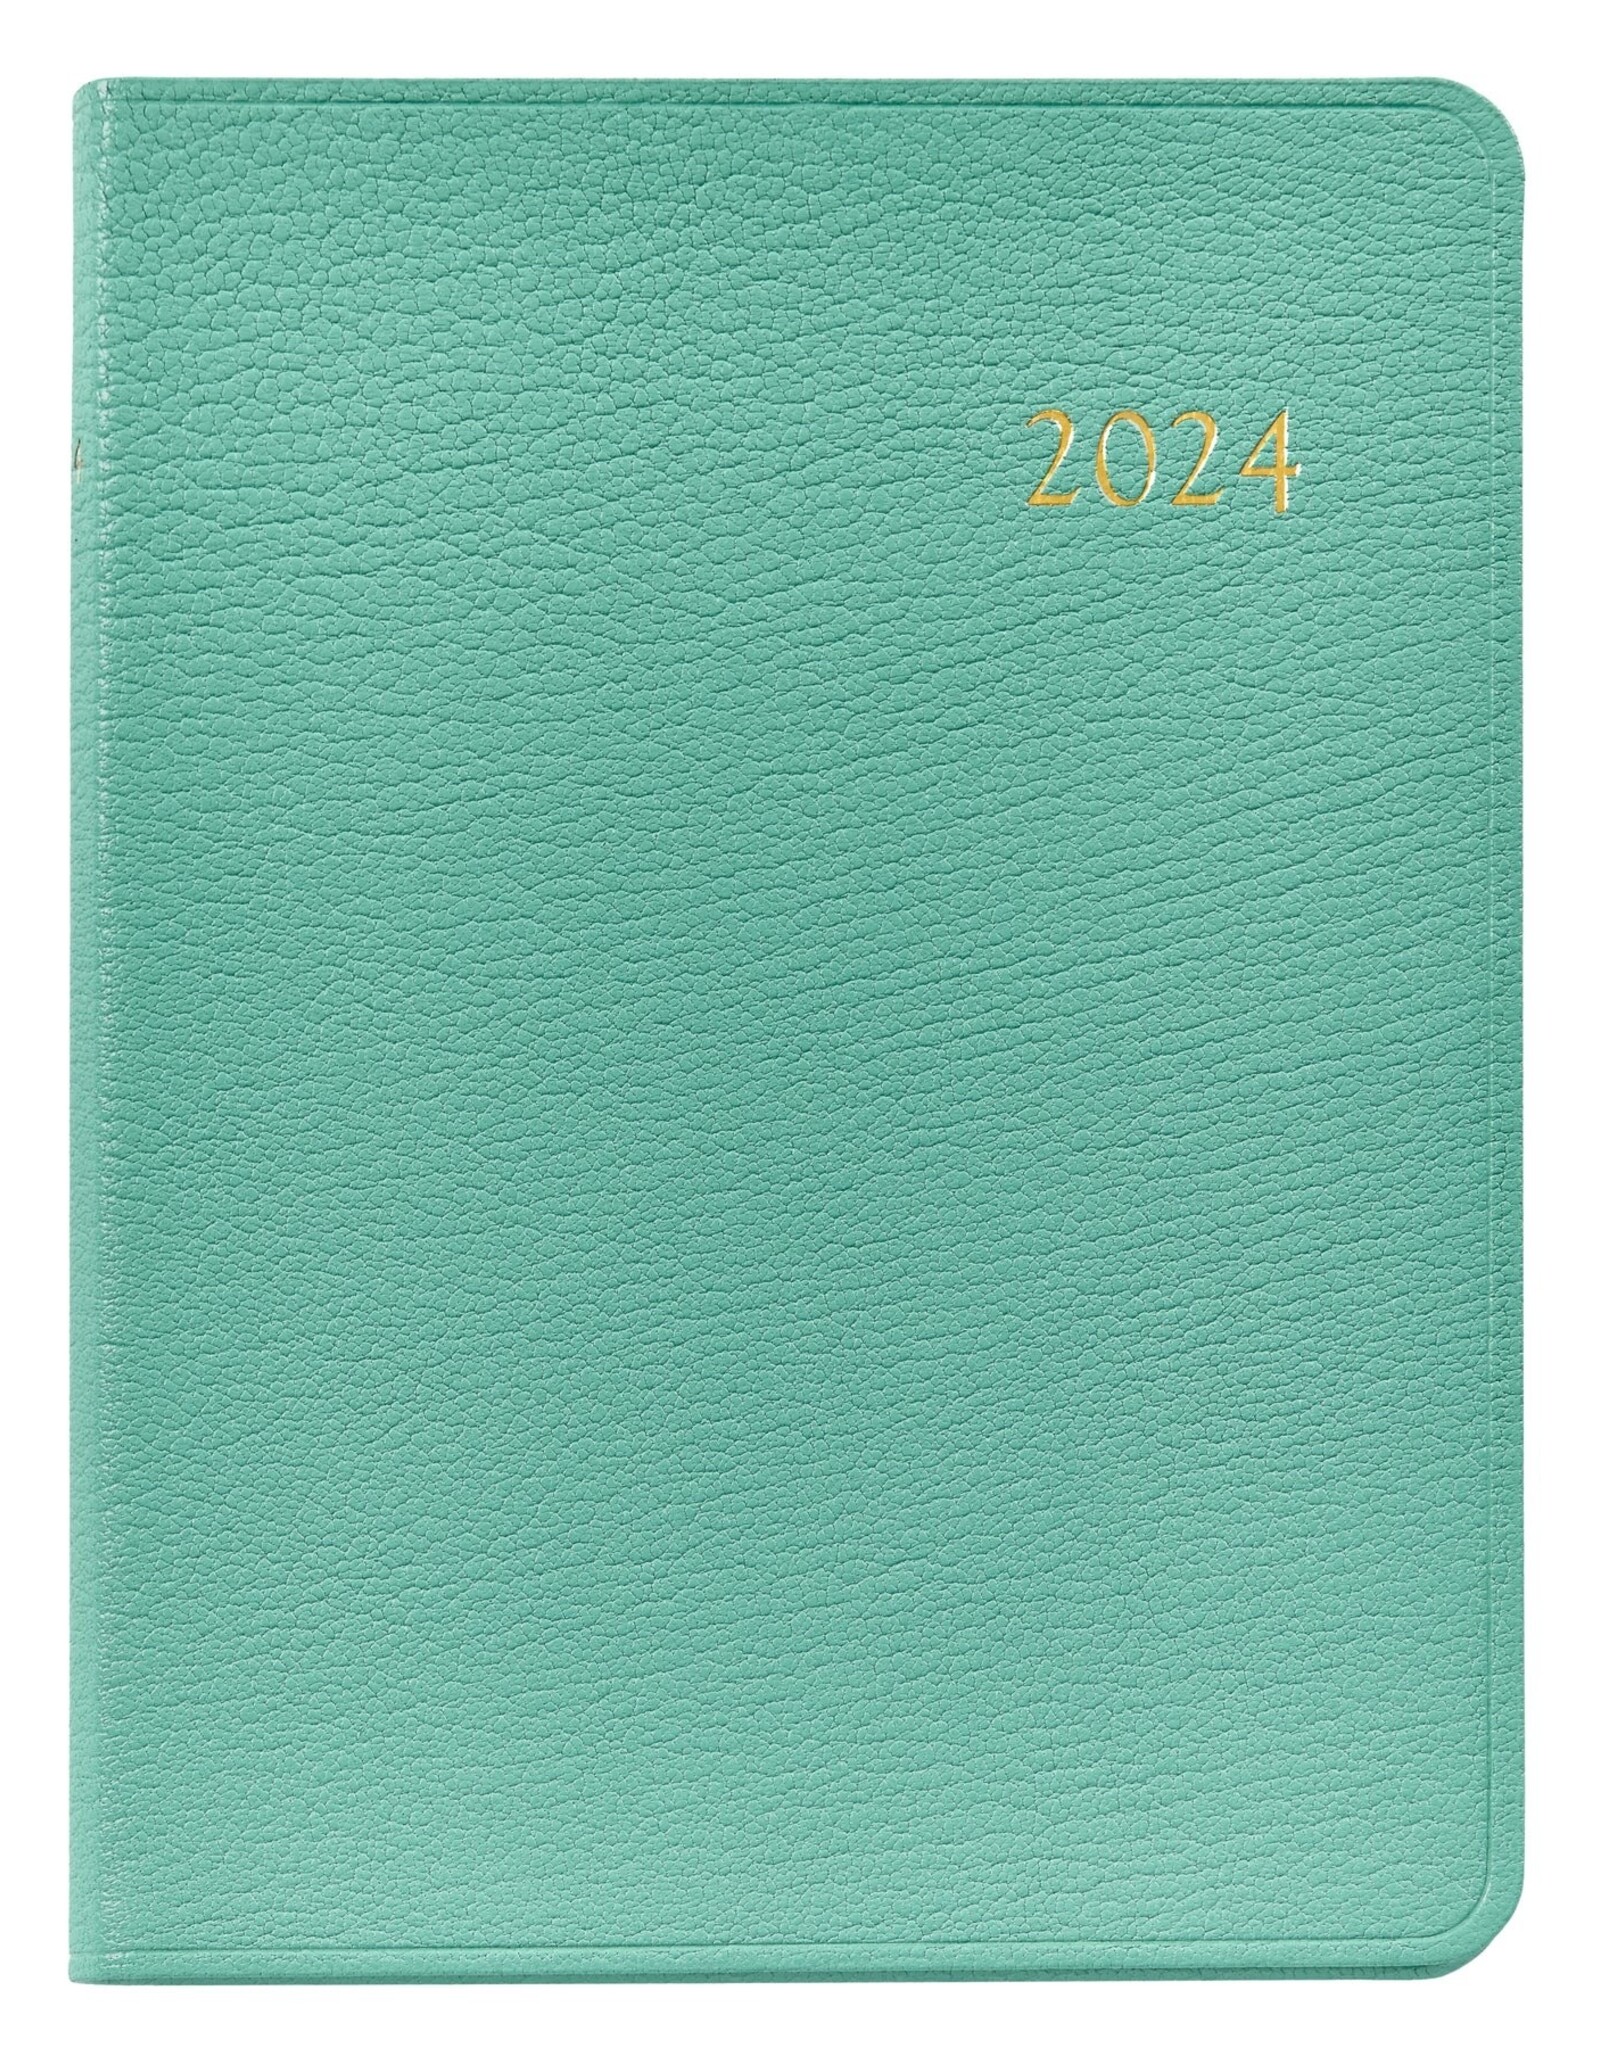 Graphic Image Desk Diary, Robin's Egg Blue Goatskin Leather